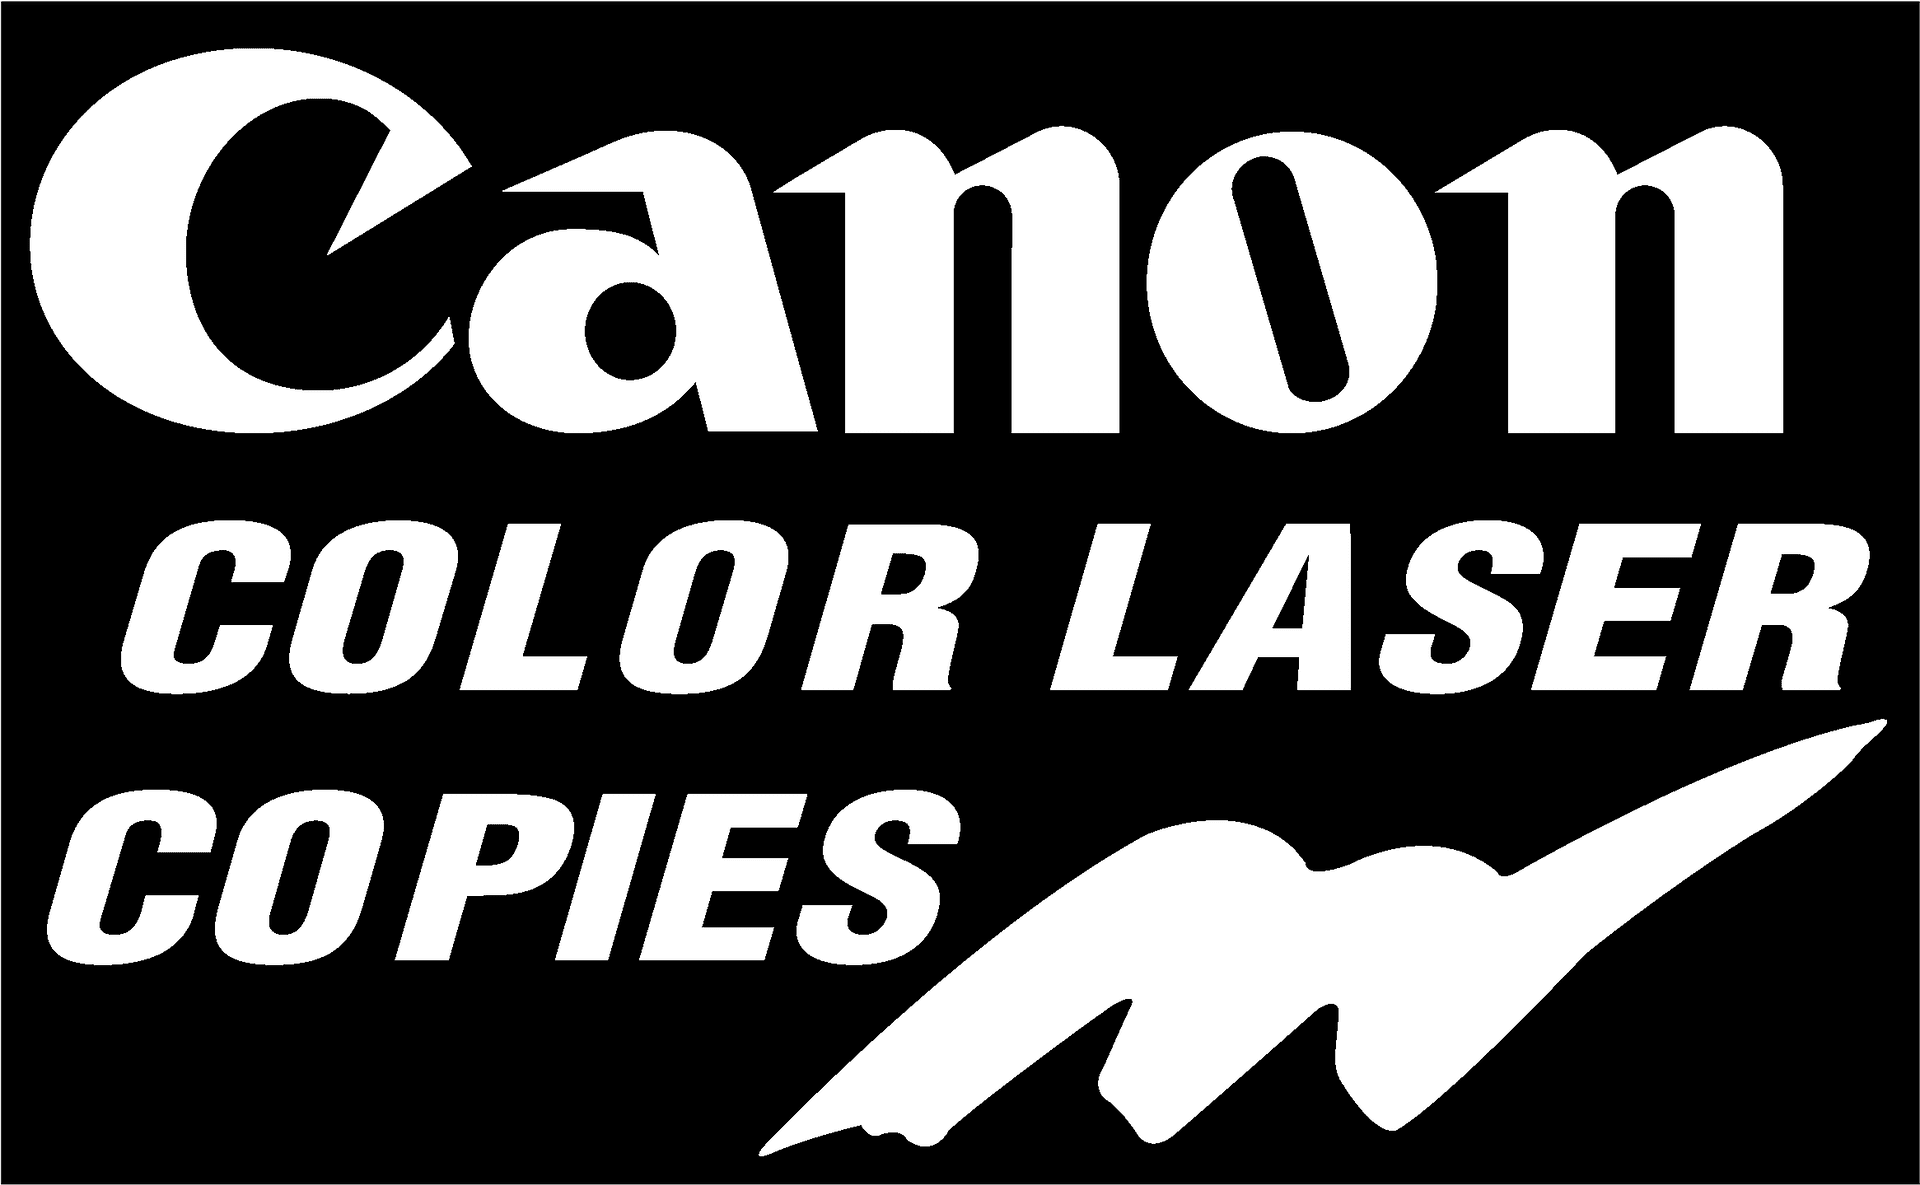 Canon Color Laser Copies Logo PNG image